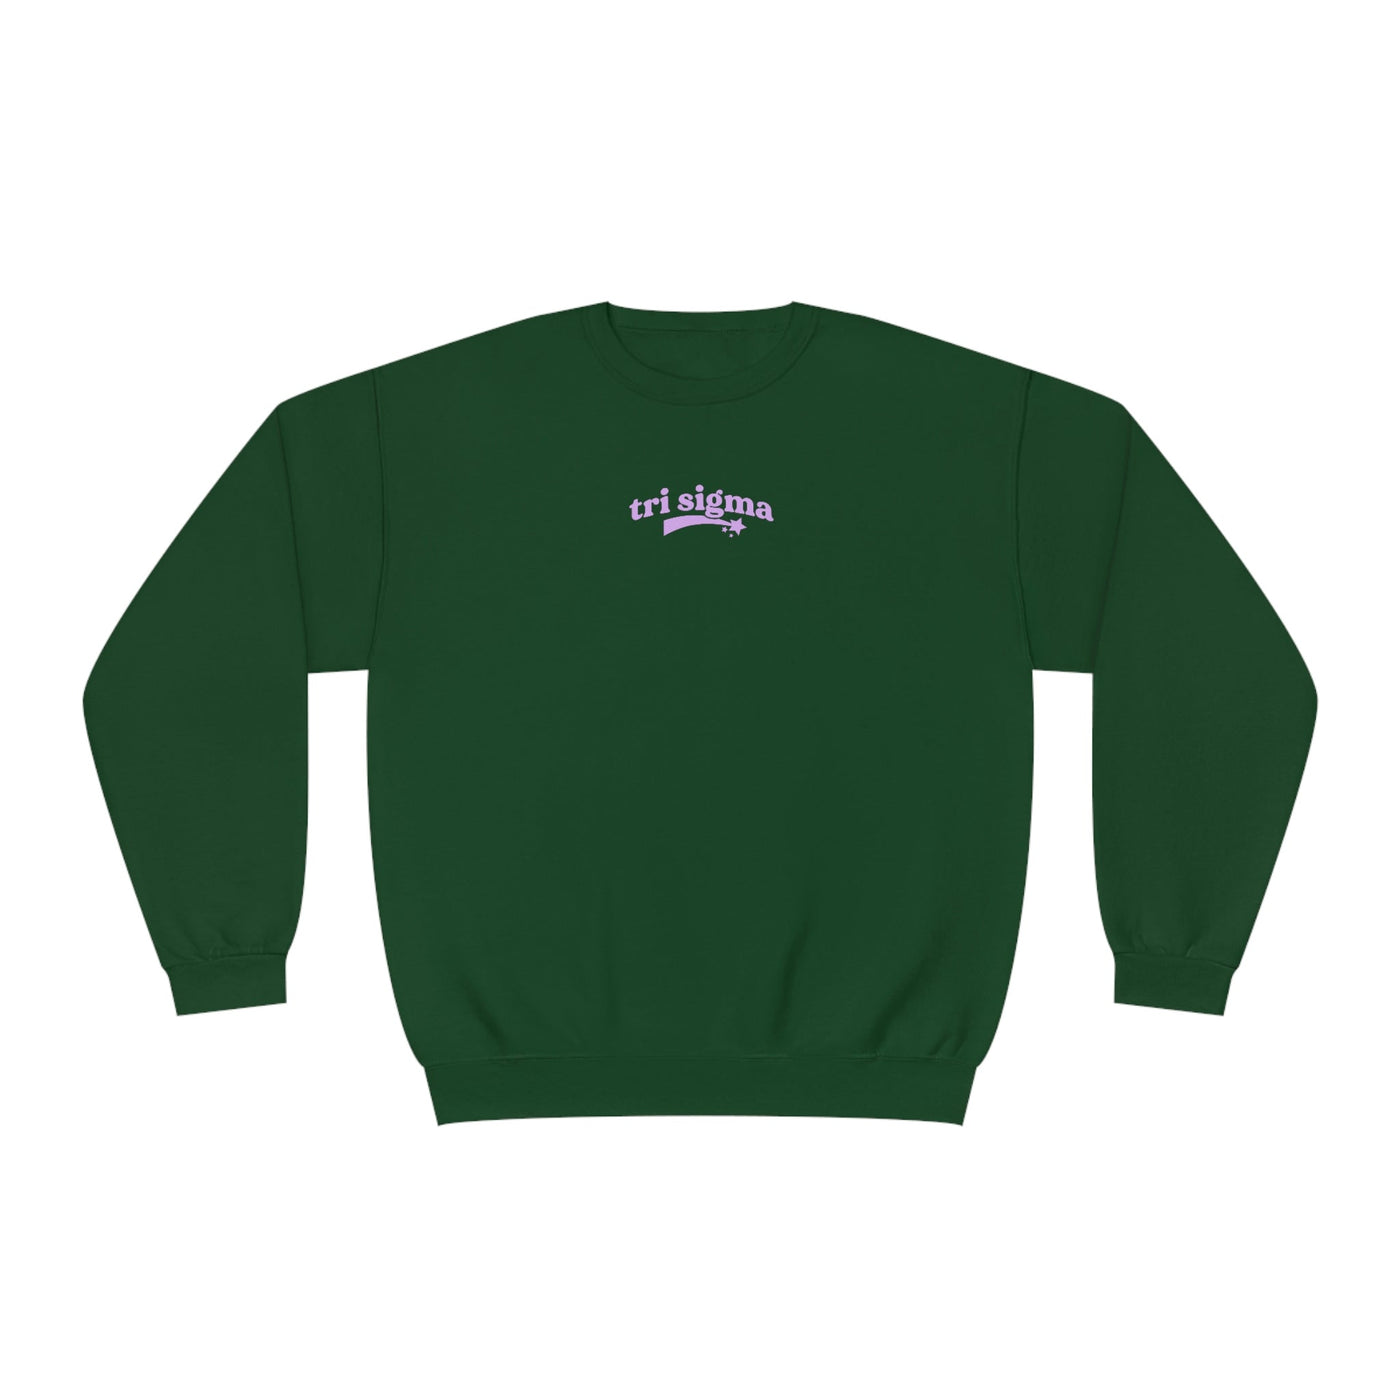 Sigma Sigma Sigma Crewneck Sweatshirt | Be Kind to the Planet Trendy Sorority Crewneck